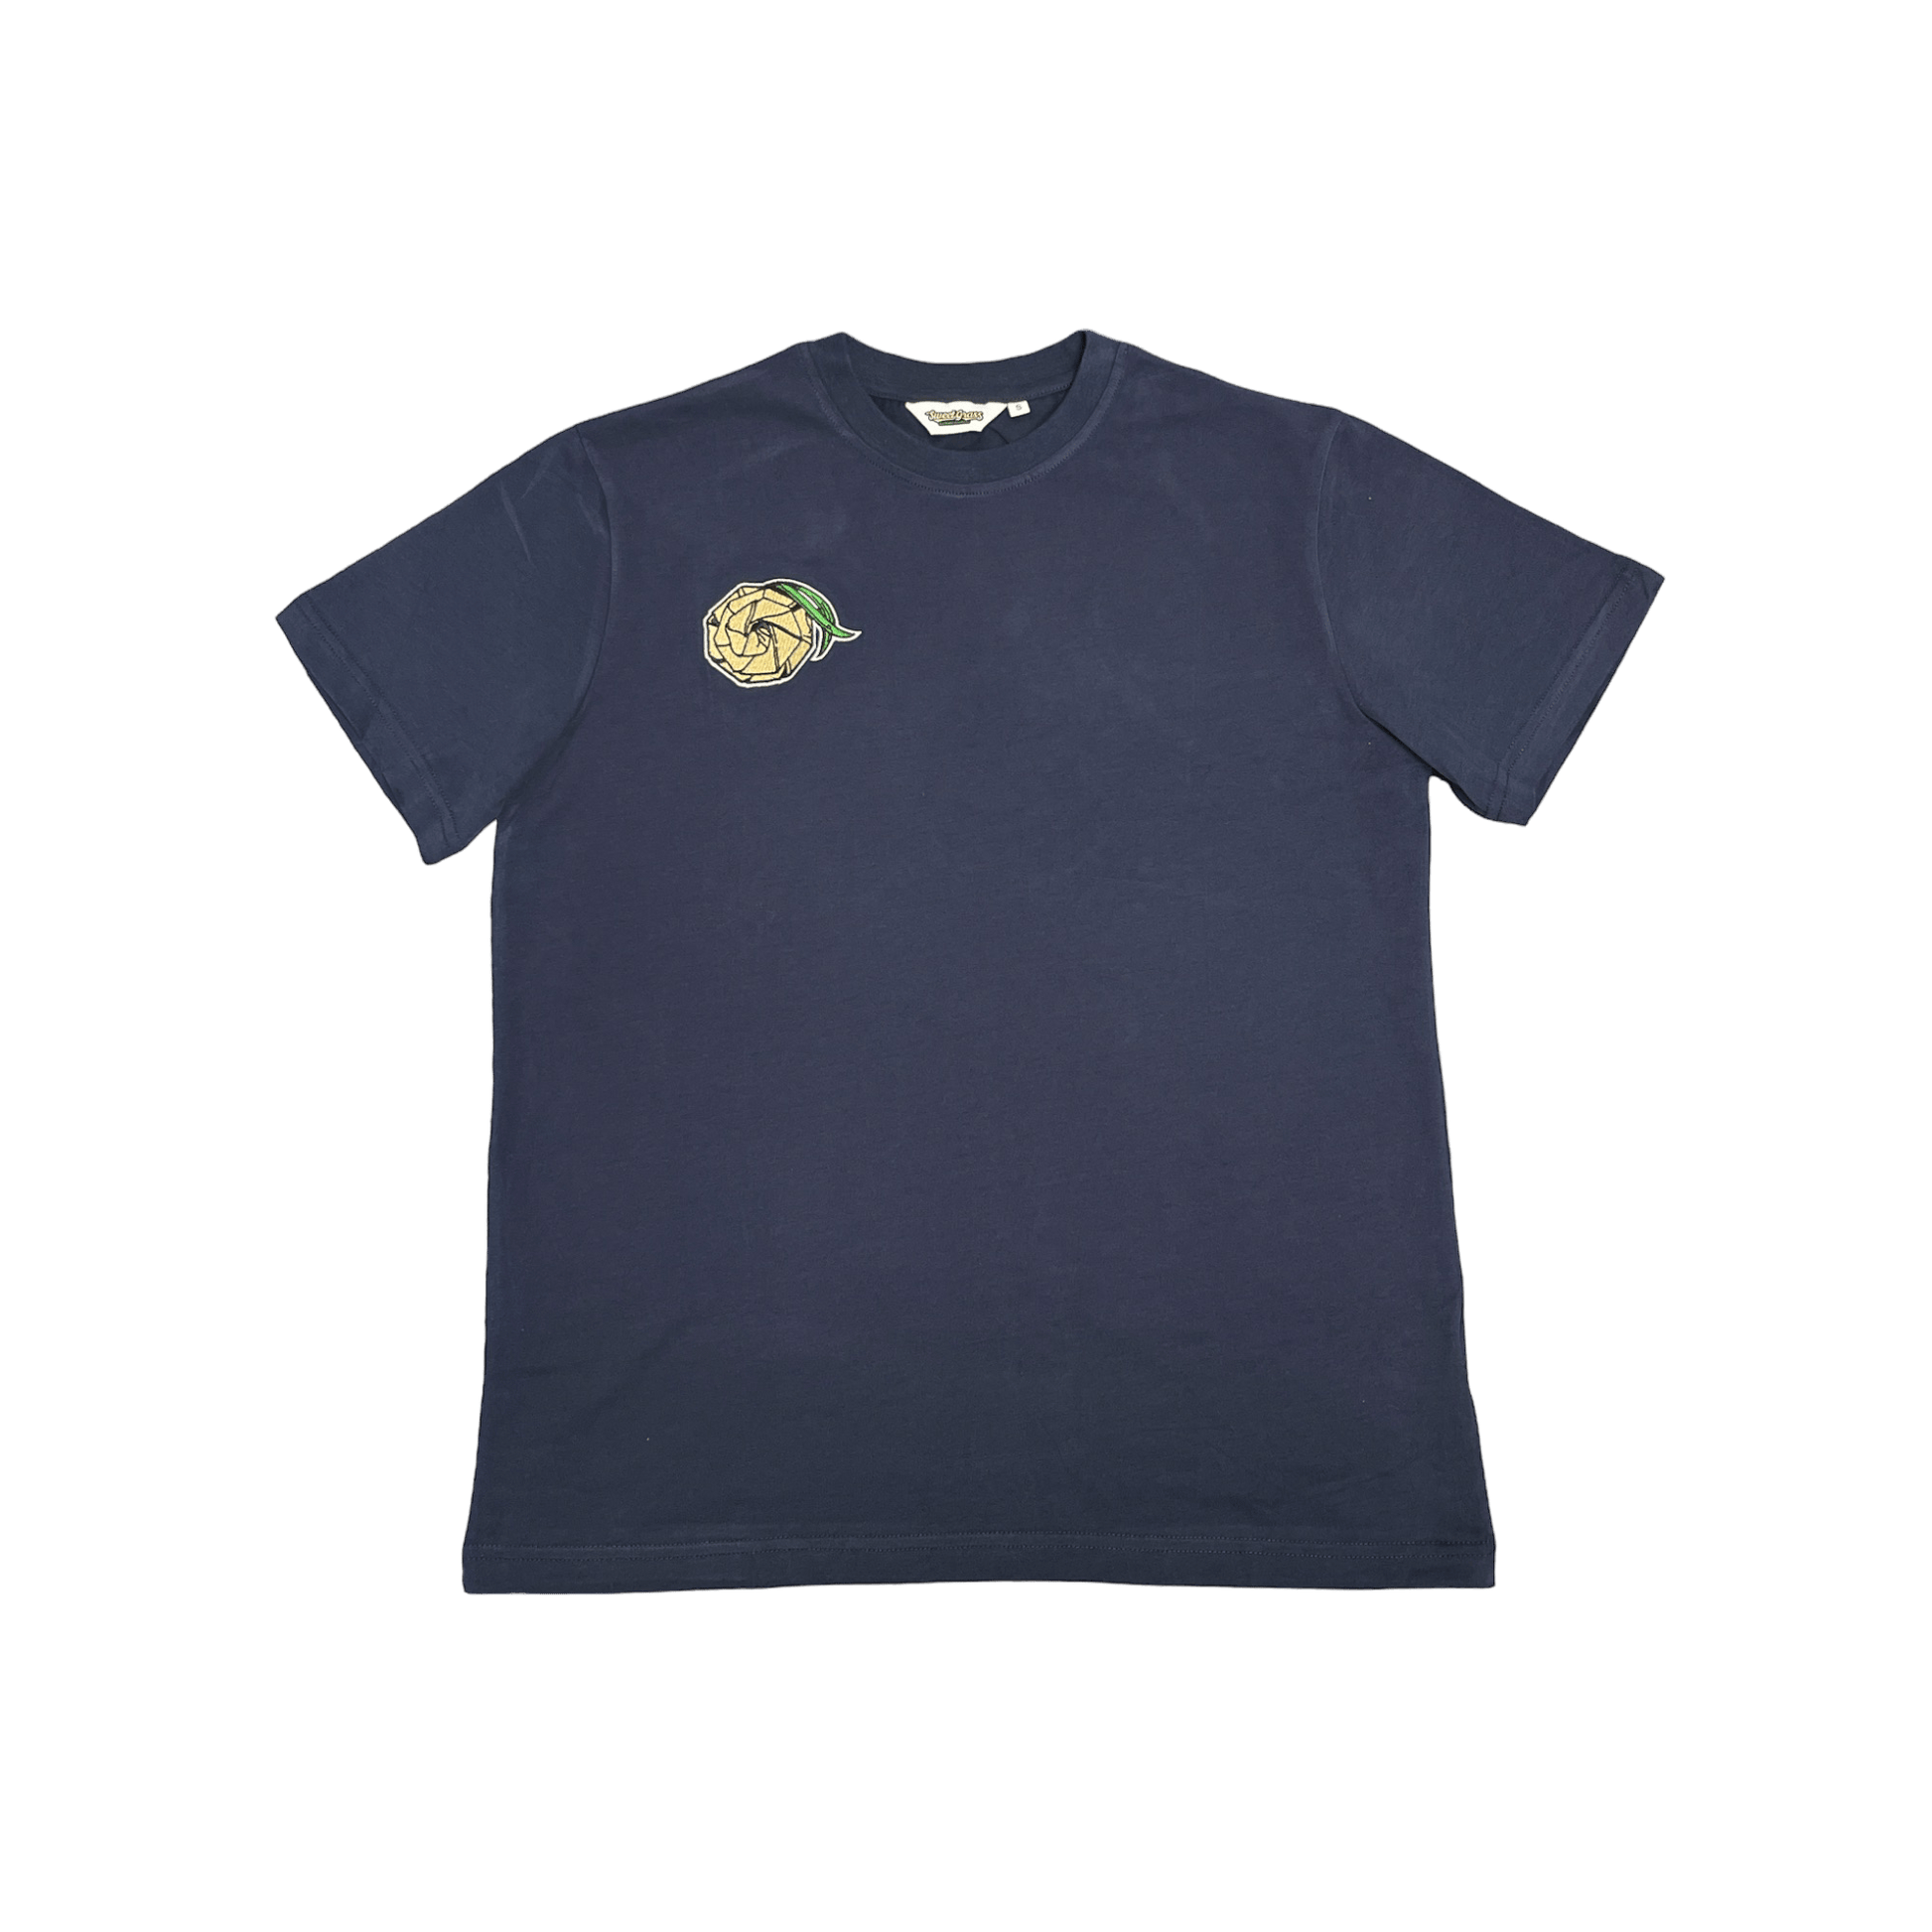 T-shirt (Navy) - SweetGrass Clothing Company